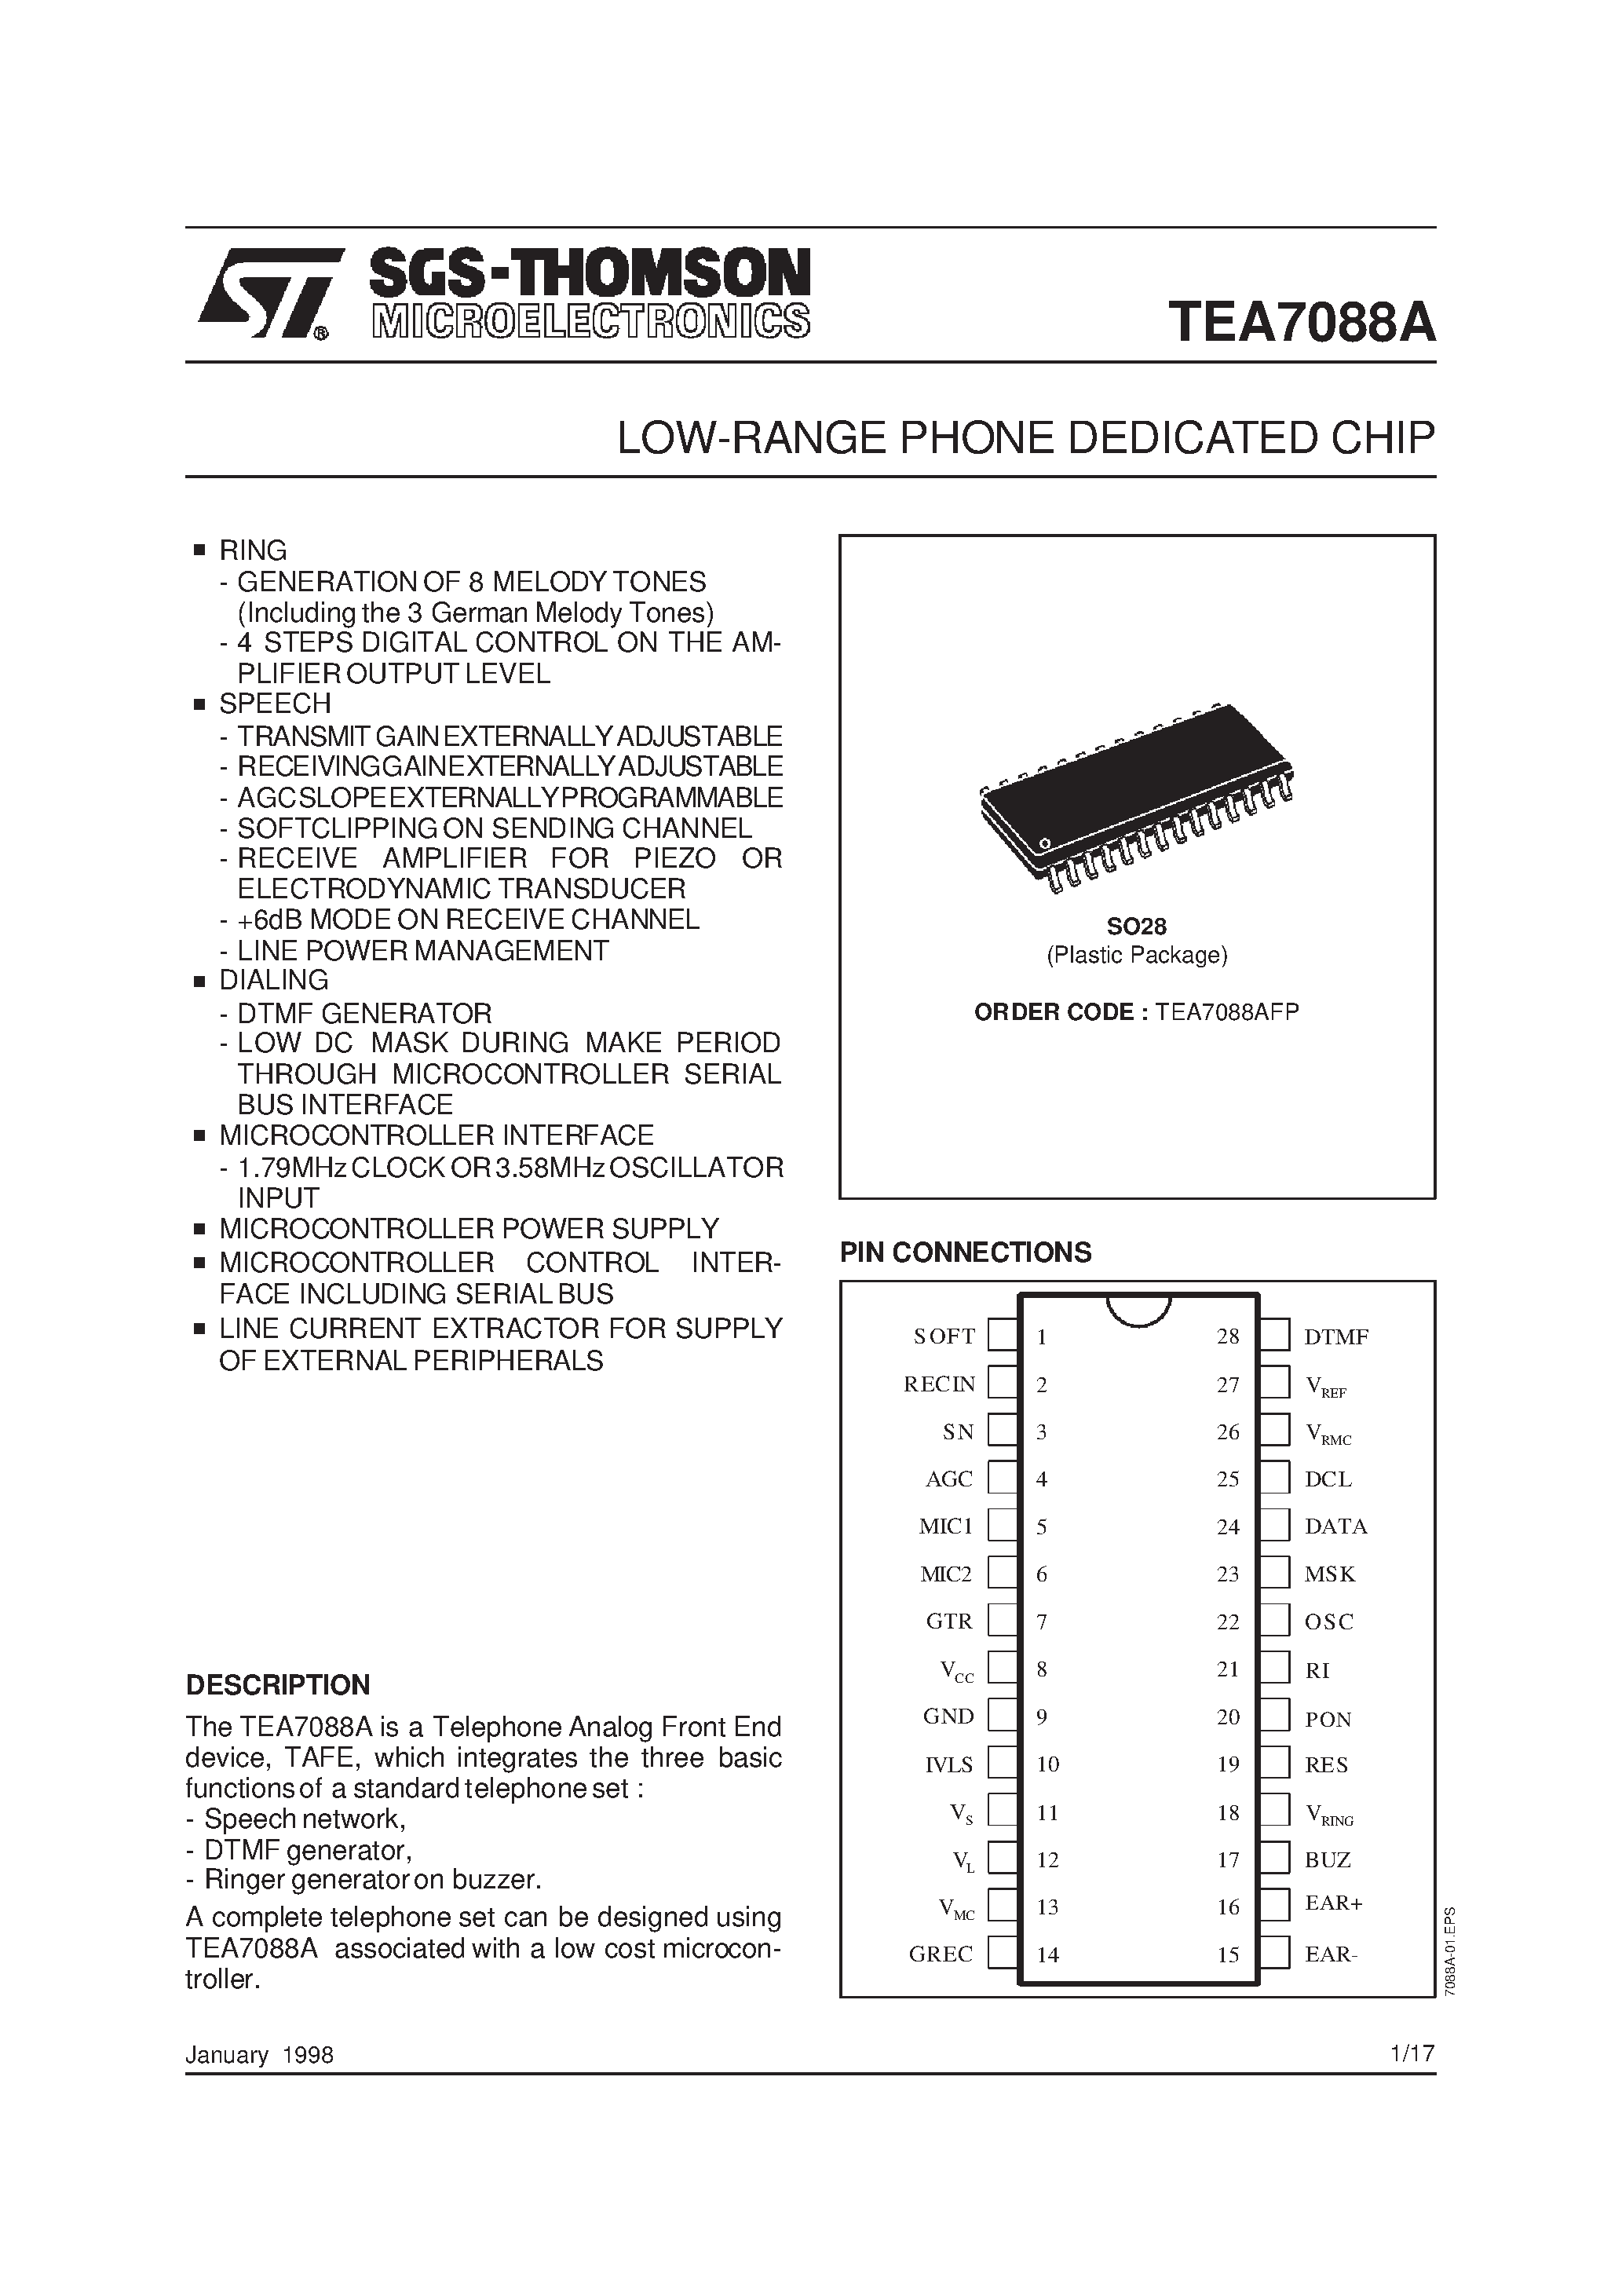 Datasheet TEA7088A - LOW-RANGE PHONE DEDICATED CHIP page 1